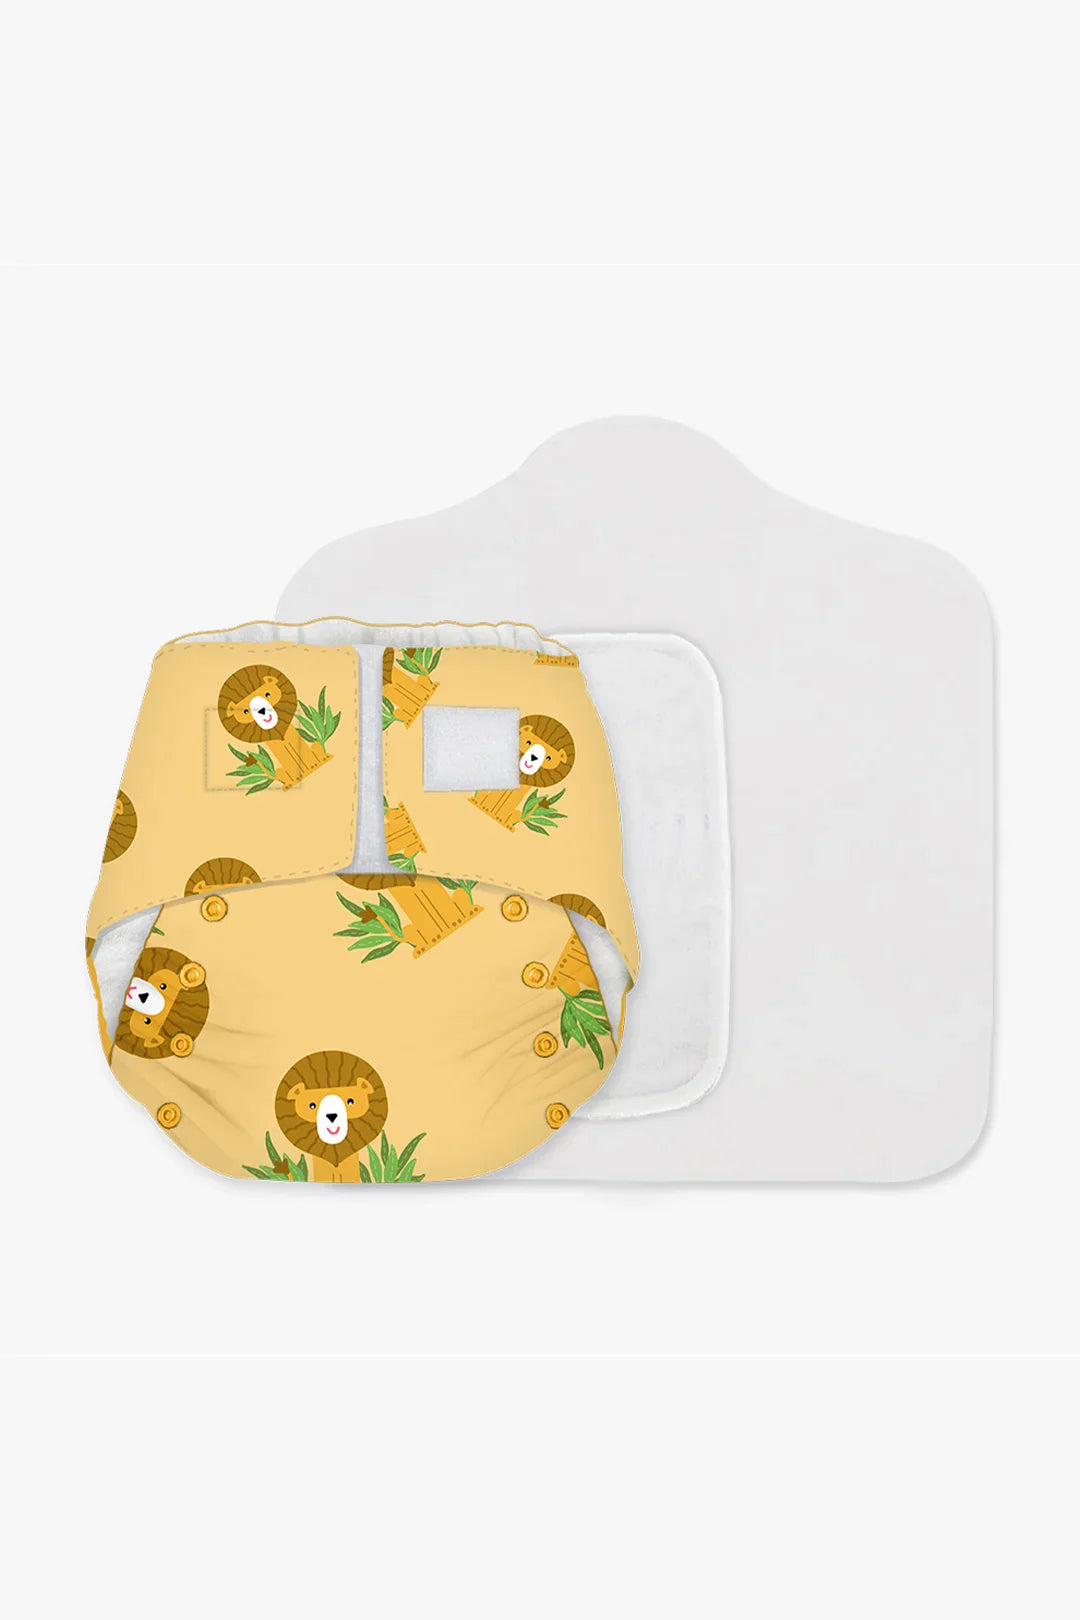 Lion Hearted - Newborn Bliss - Cloth Diaper for Newborn Babies